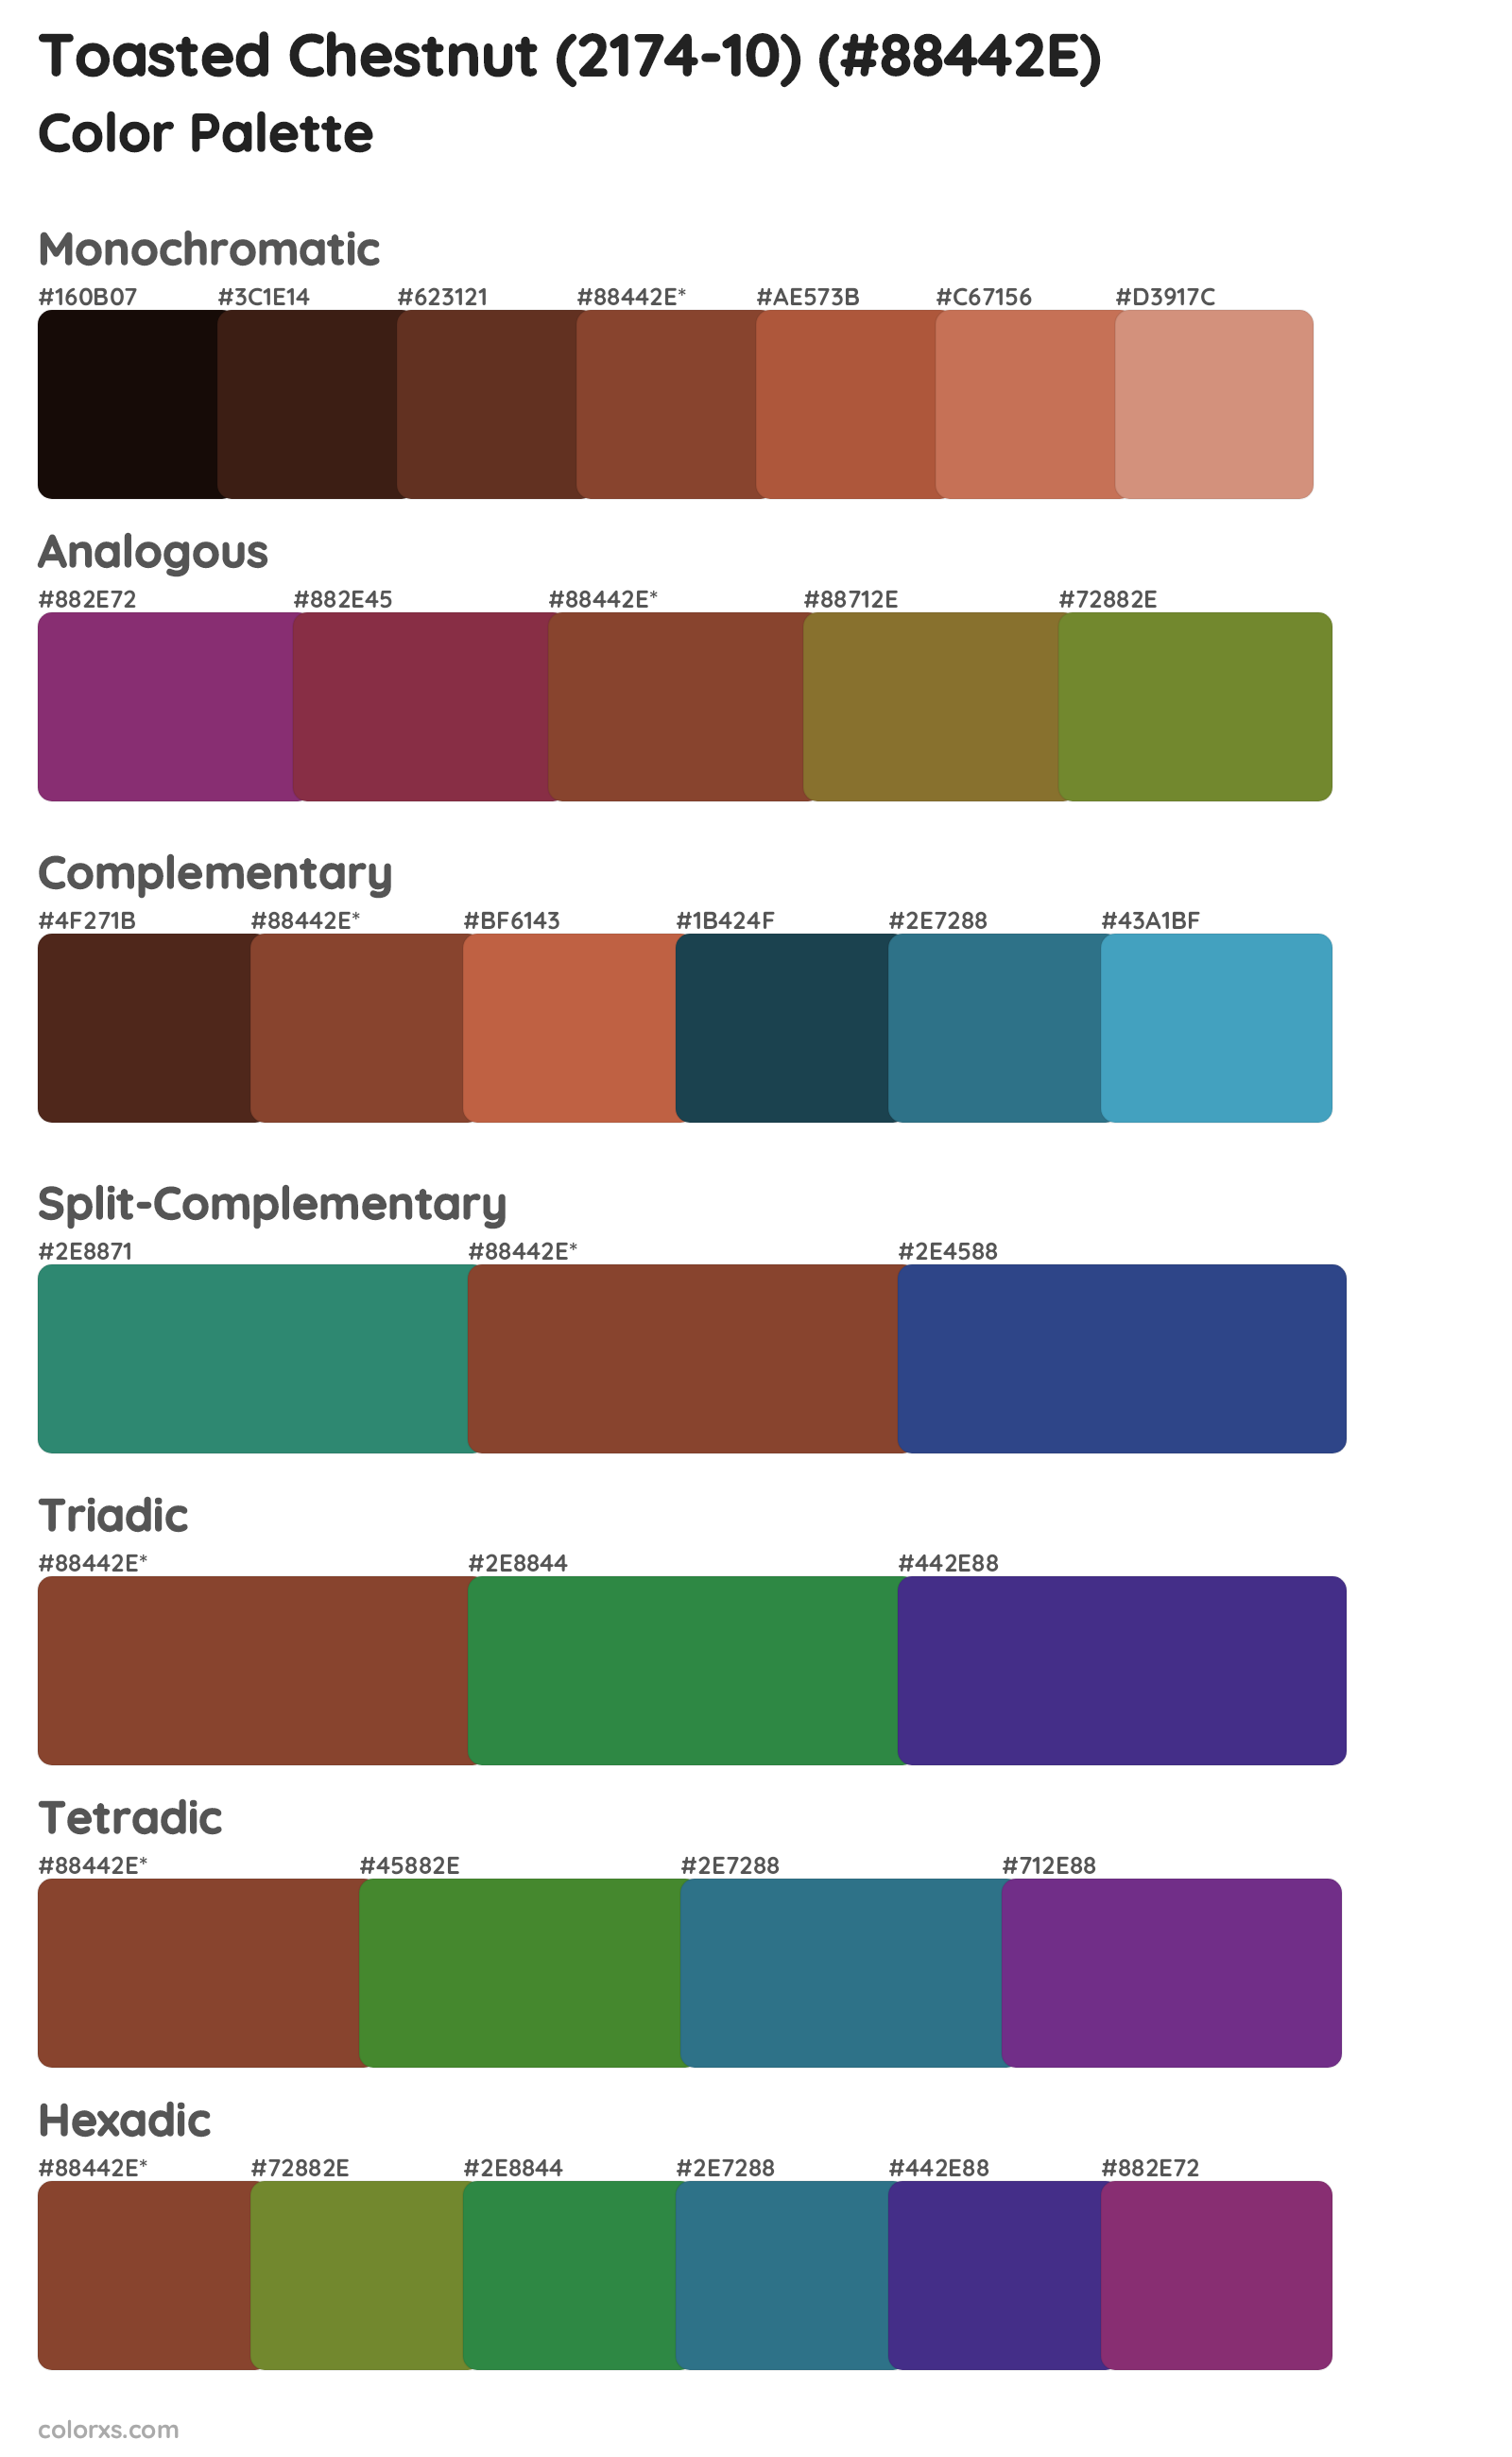 Toasted Chestnut (2174-10) Color Scheme Palettes